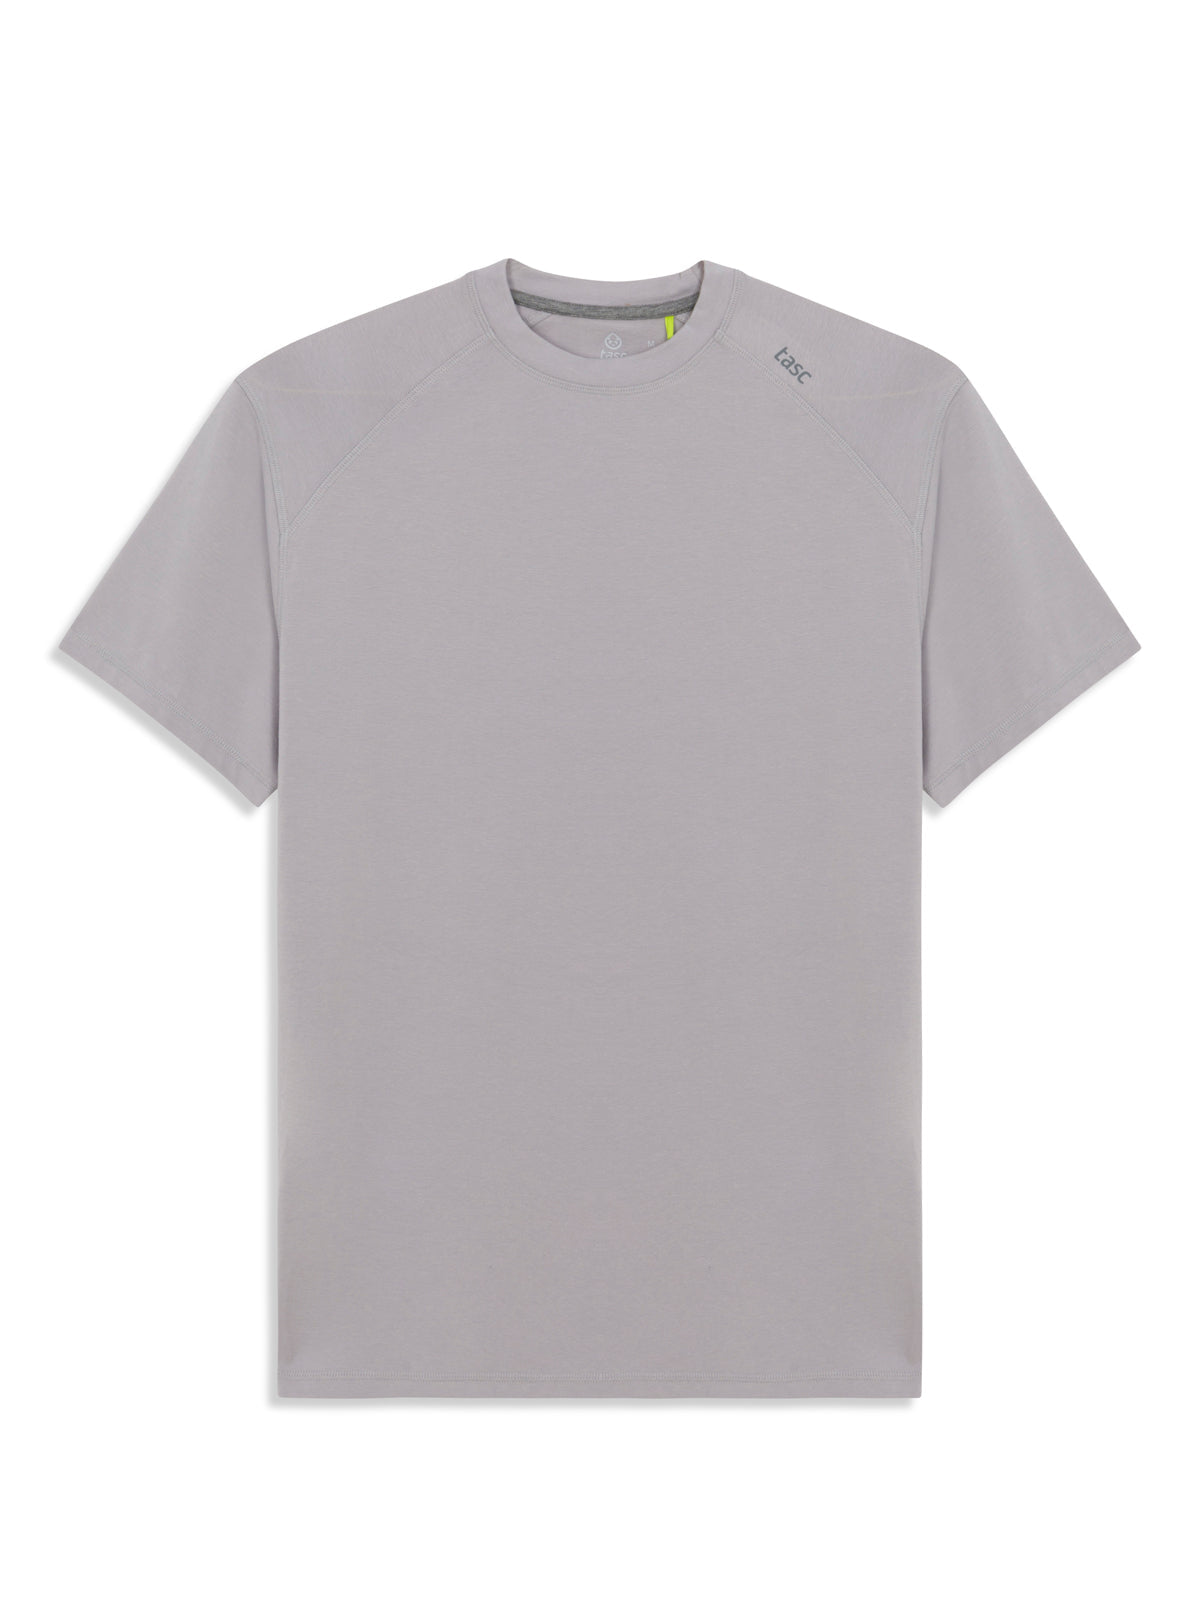 Tasc Men's Carrollton Fitness T-Shirt Apparel Tasc Silver-040 Small 